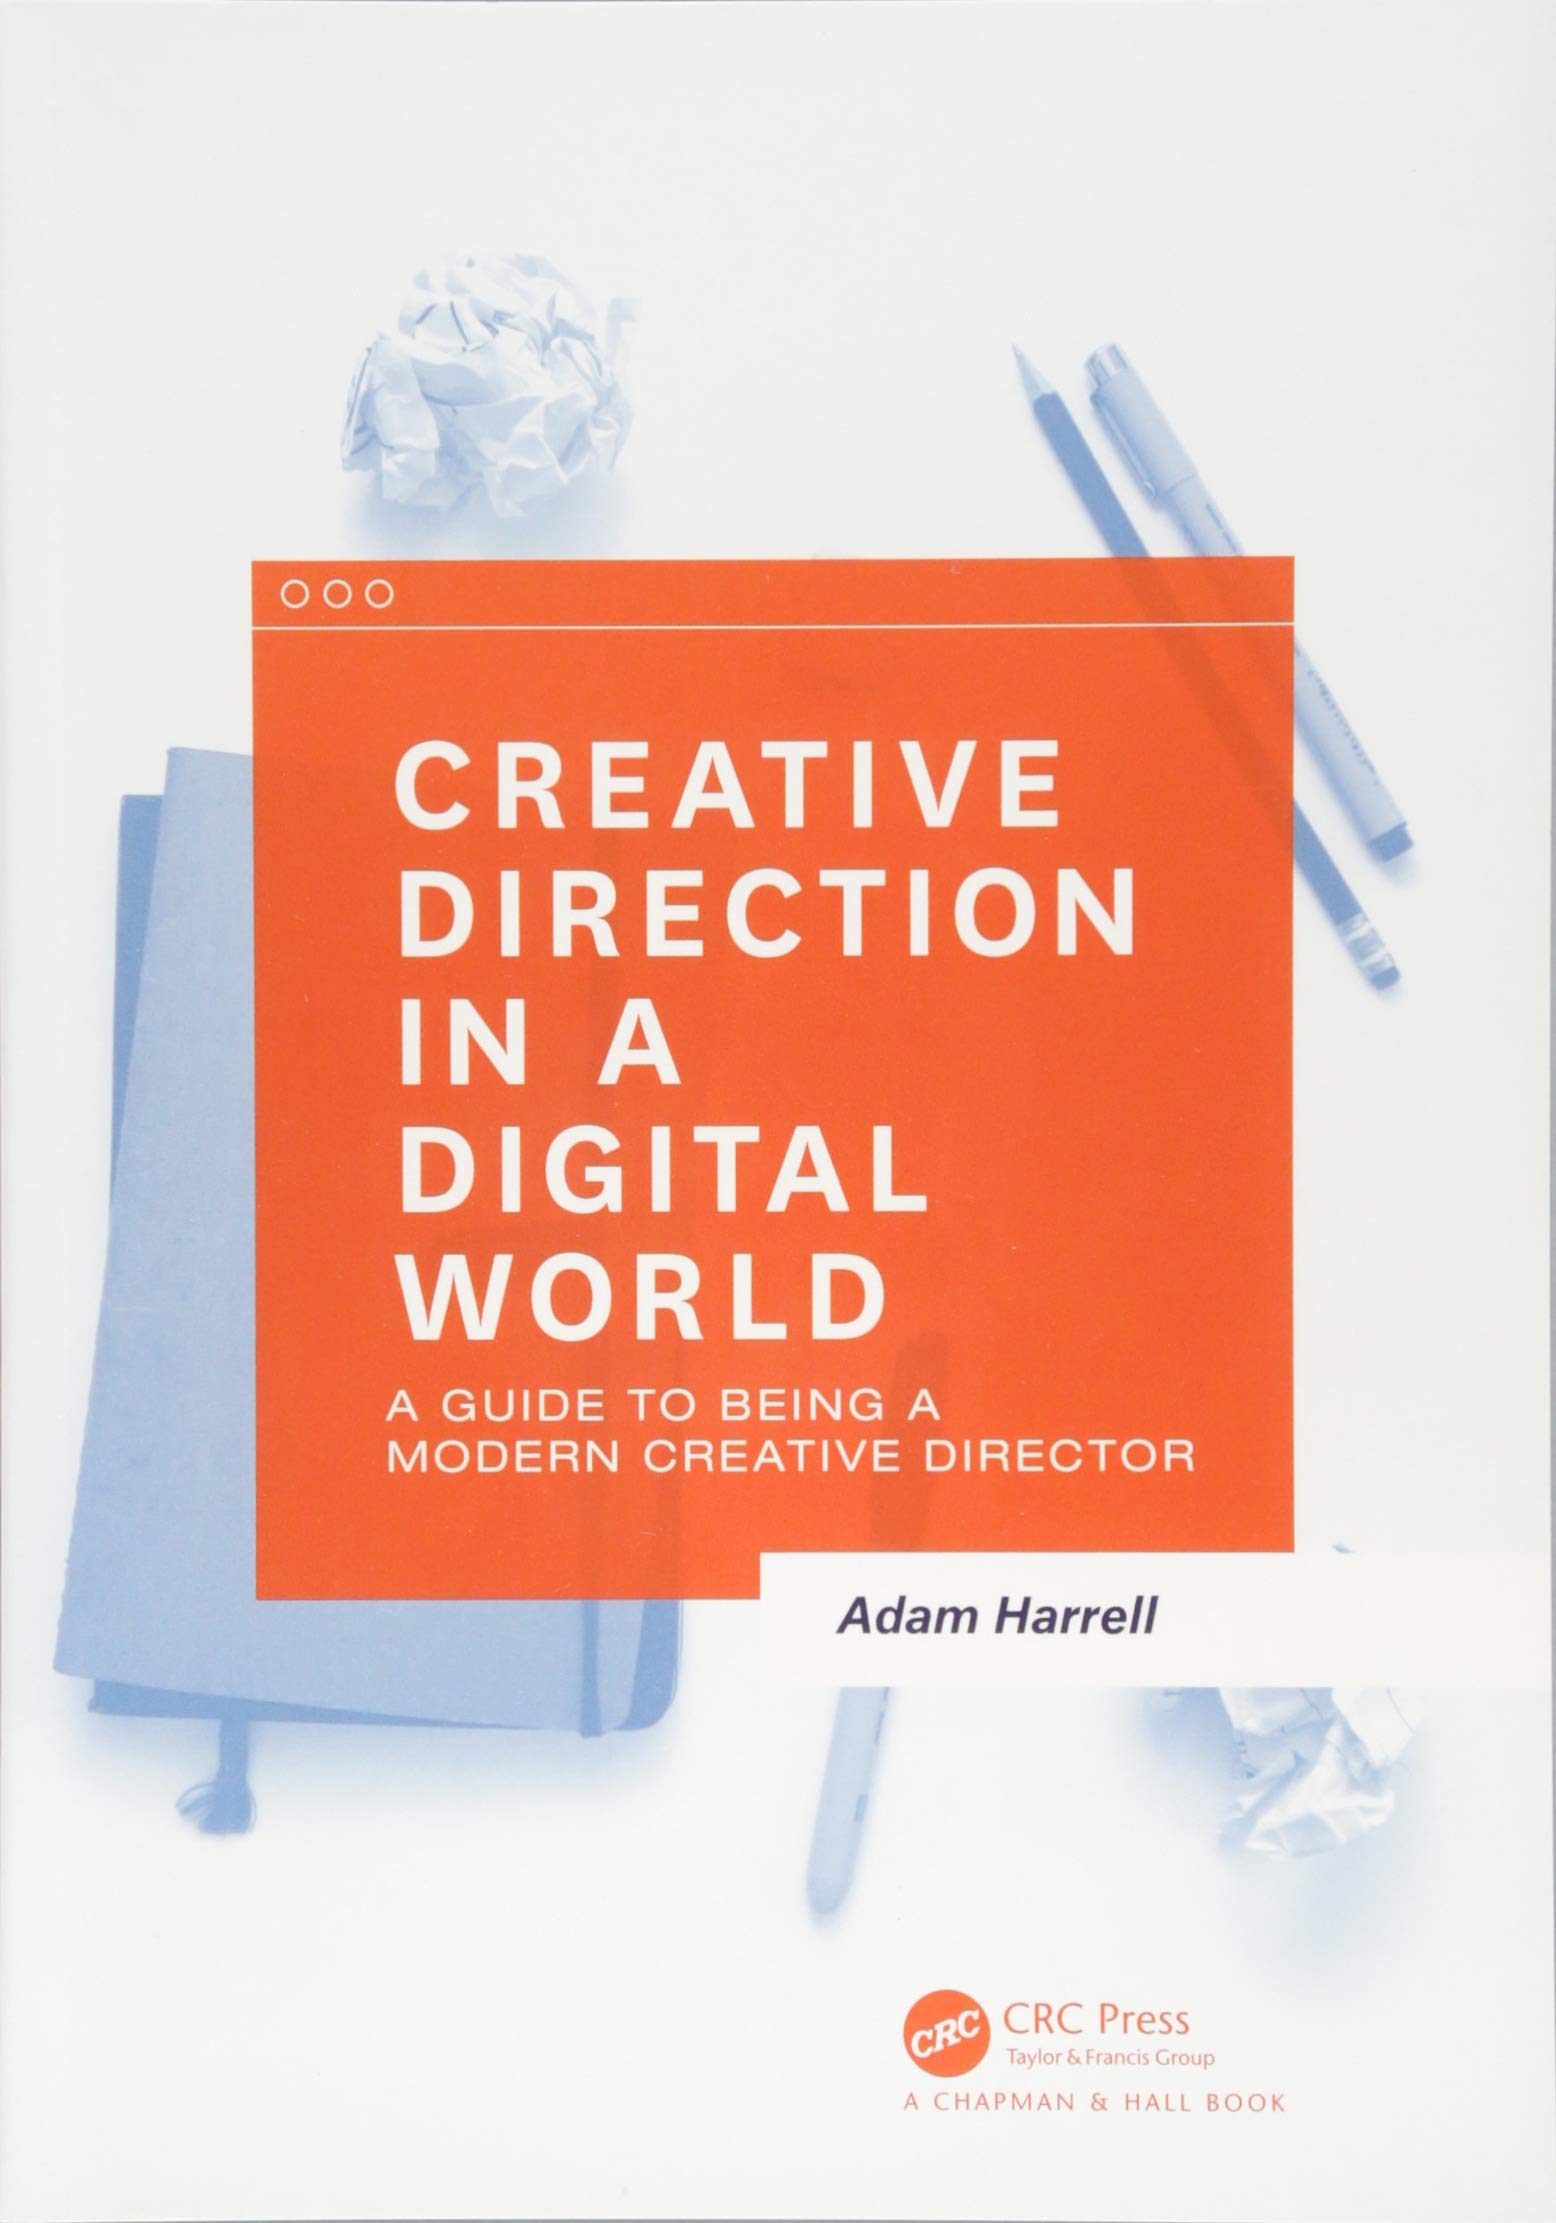 Creative Direction in a Digital World by Adam Harrell